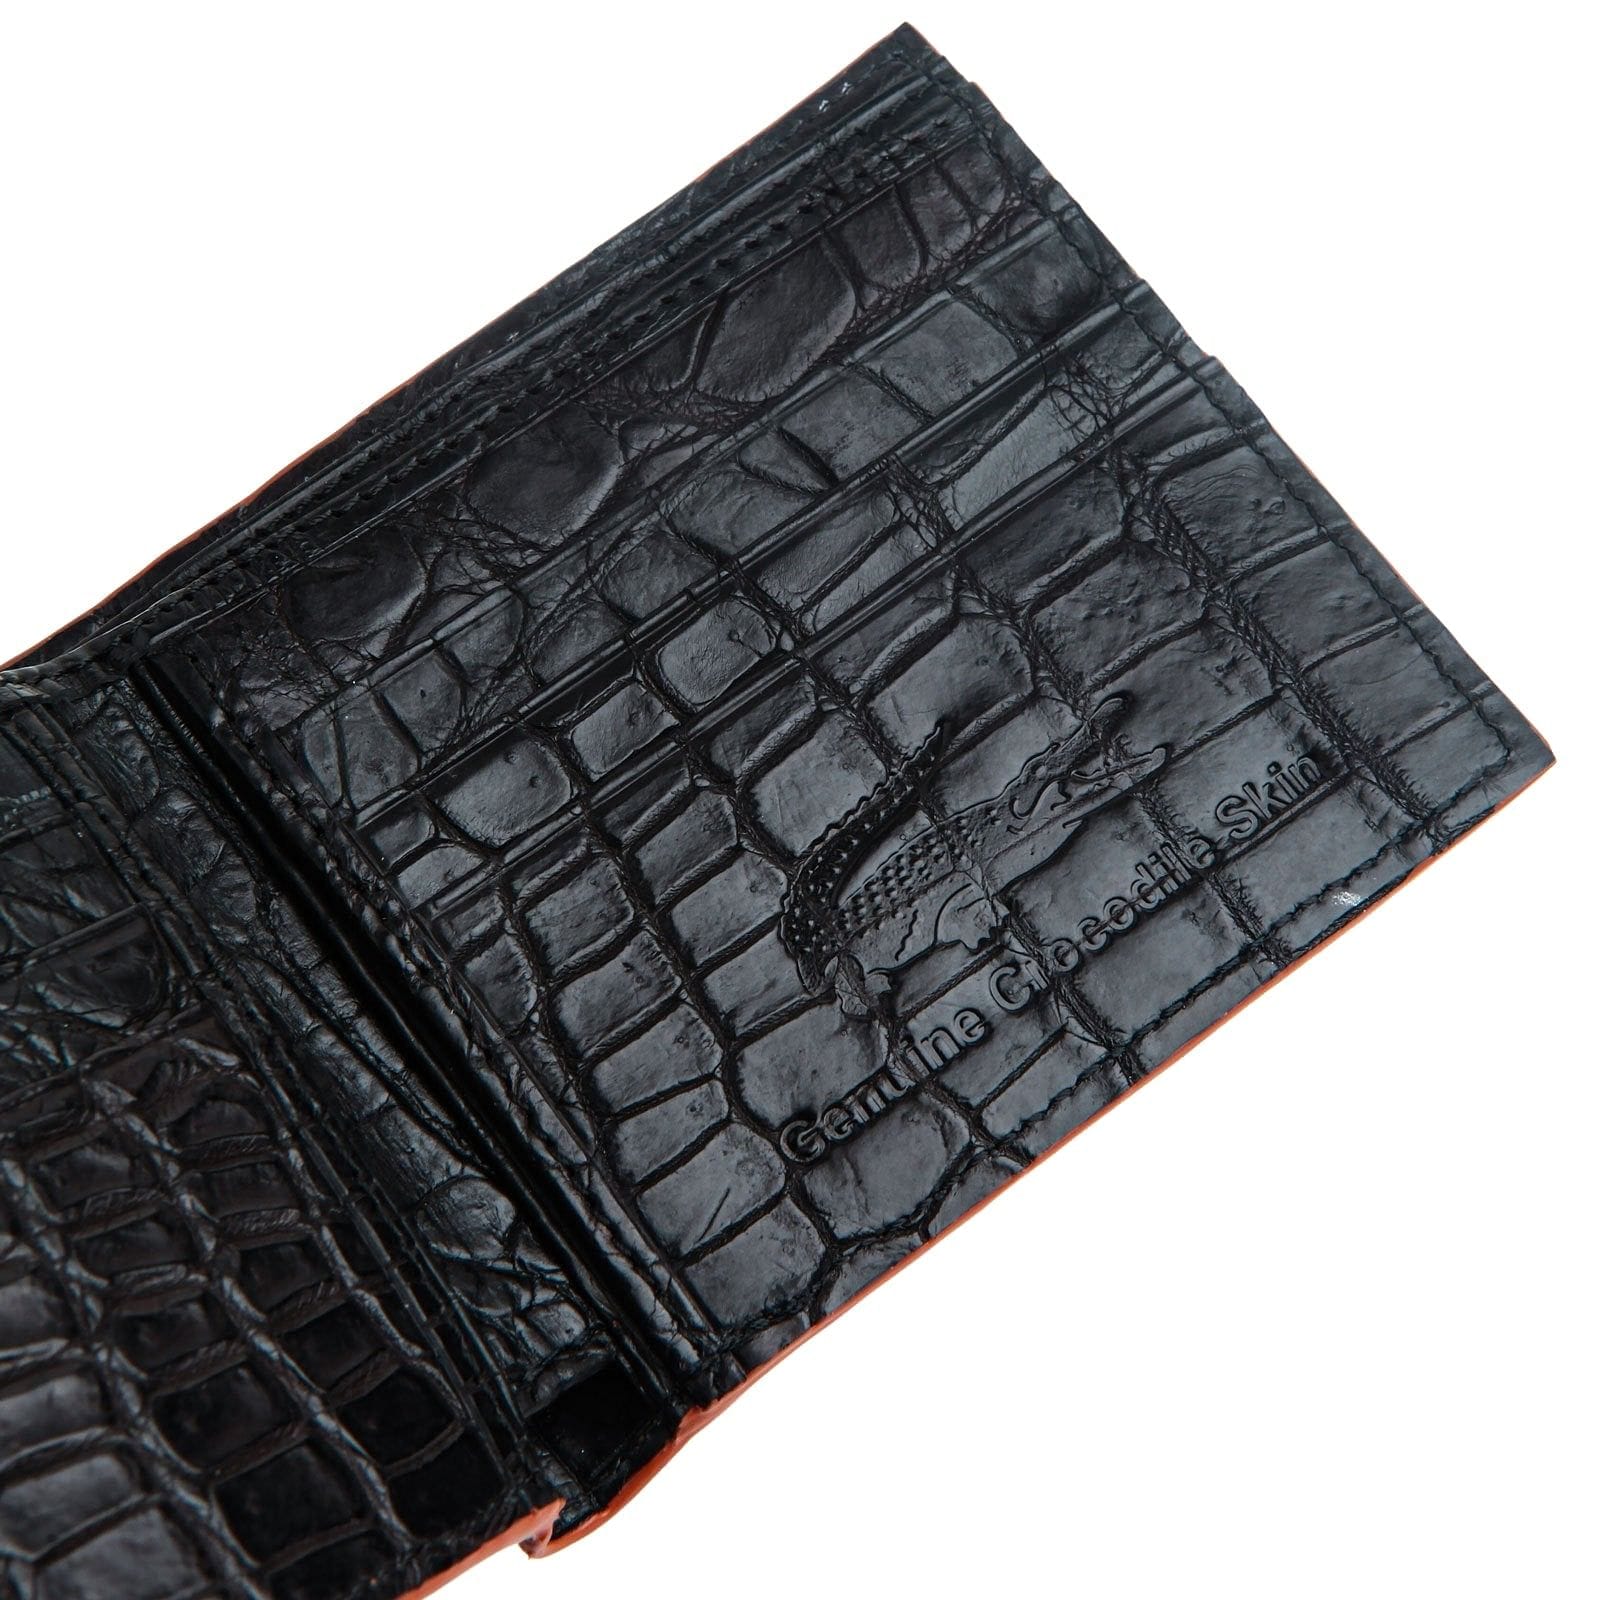 Double side Genuine alligator Crocodile leather skin brown bifold wallet  for men